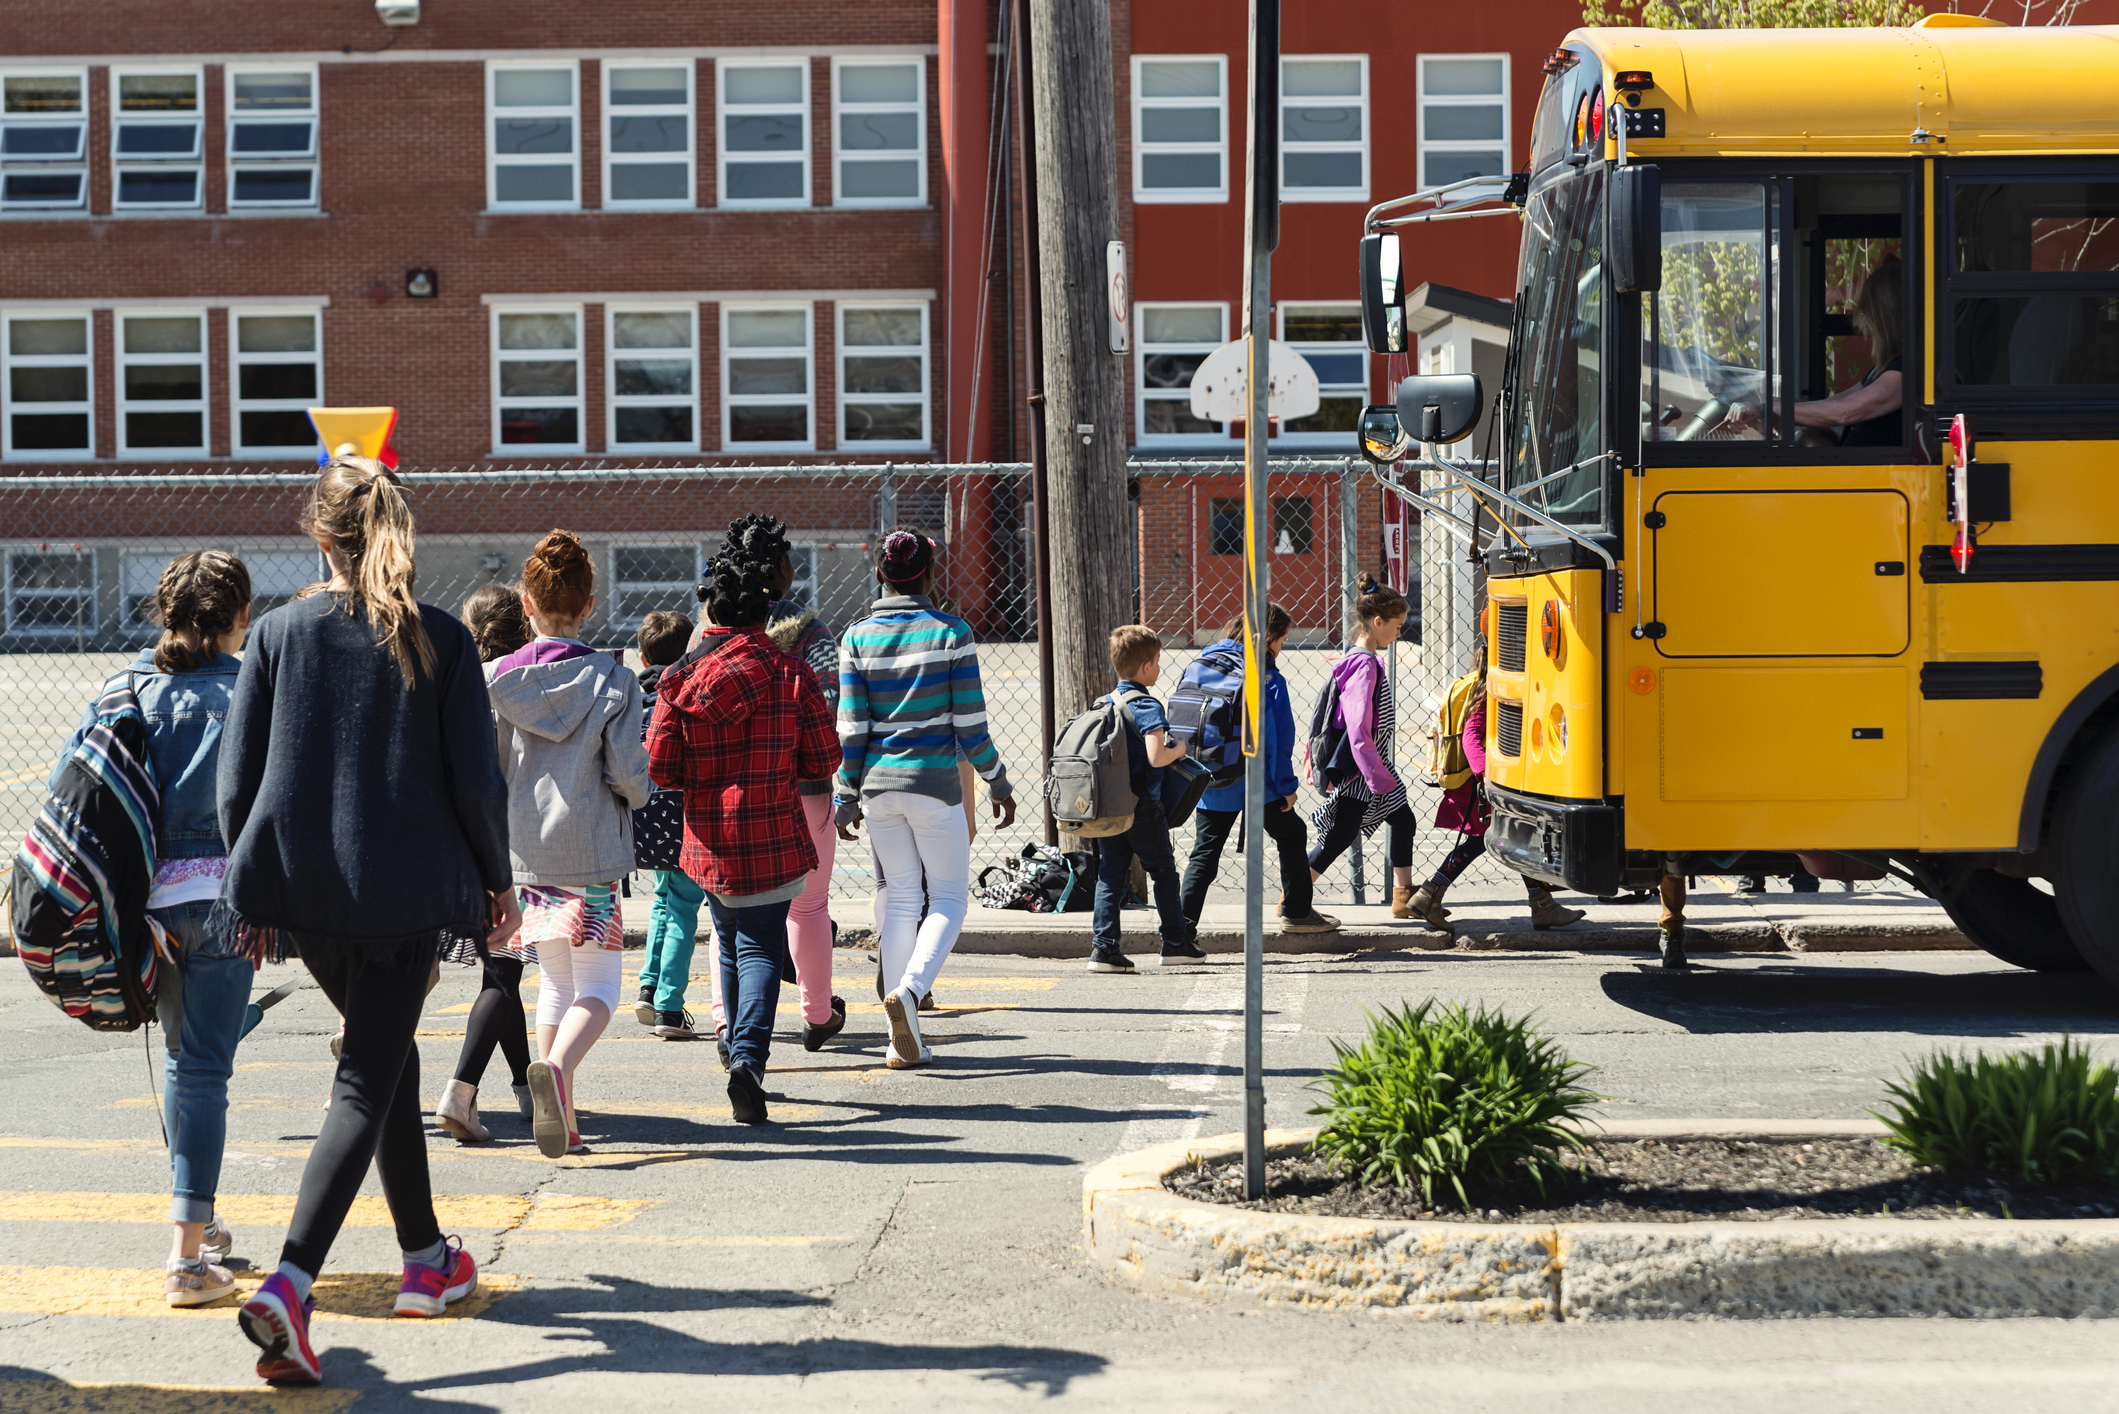 Kids in line crossing street to get on school bus in front of school building.